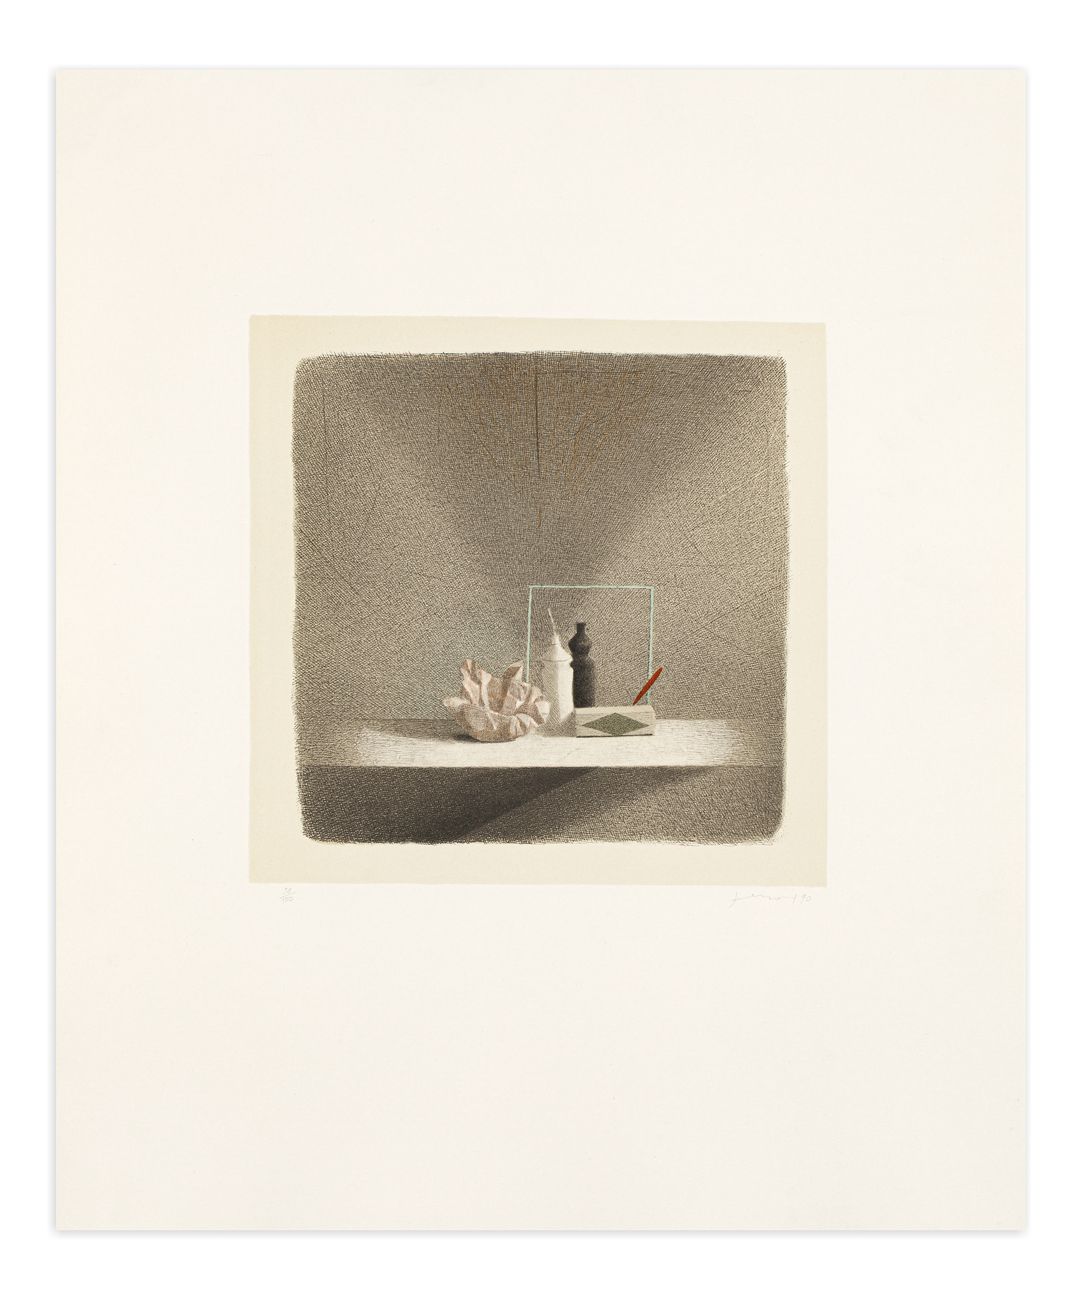 GIANFRANCO FERRONI (1927-2001) - Cono d'ombra, 1990 背景石版画

60x50厘米

正面有铅笔签名、日期和编&hellip;